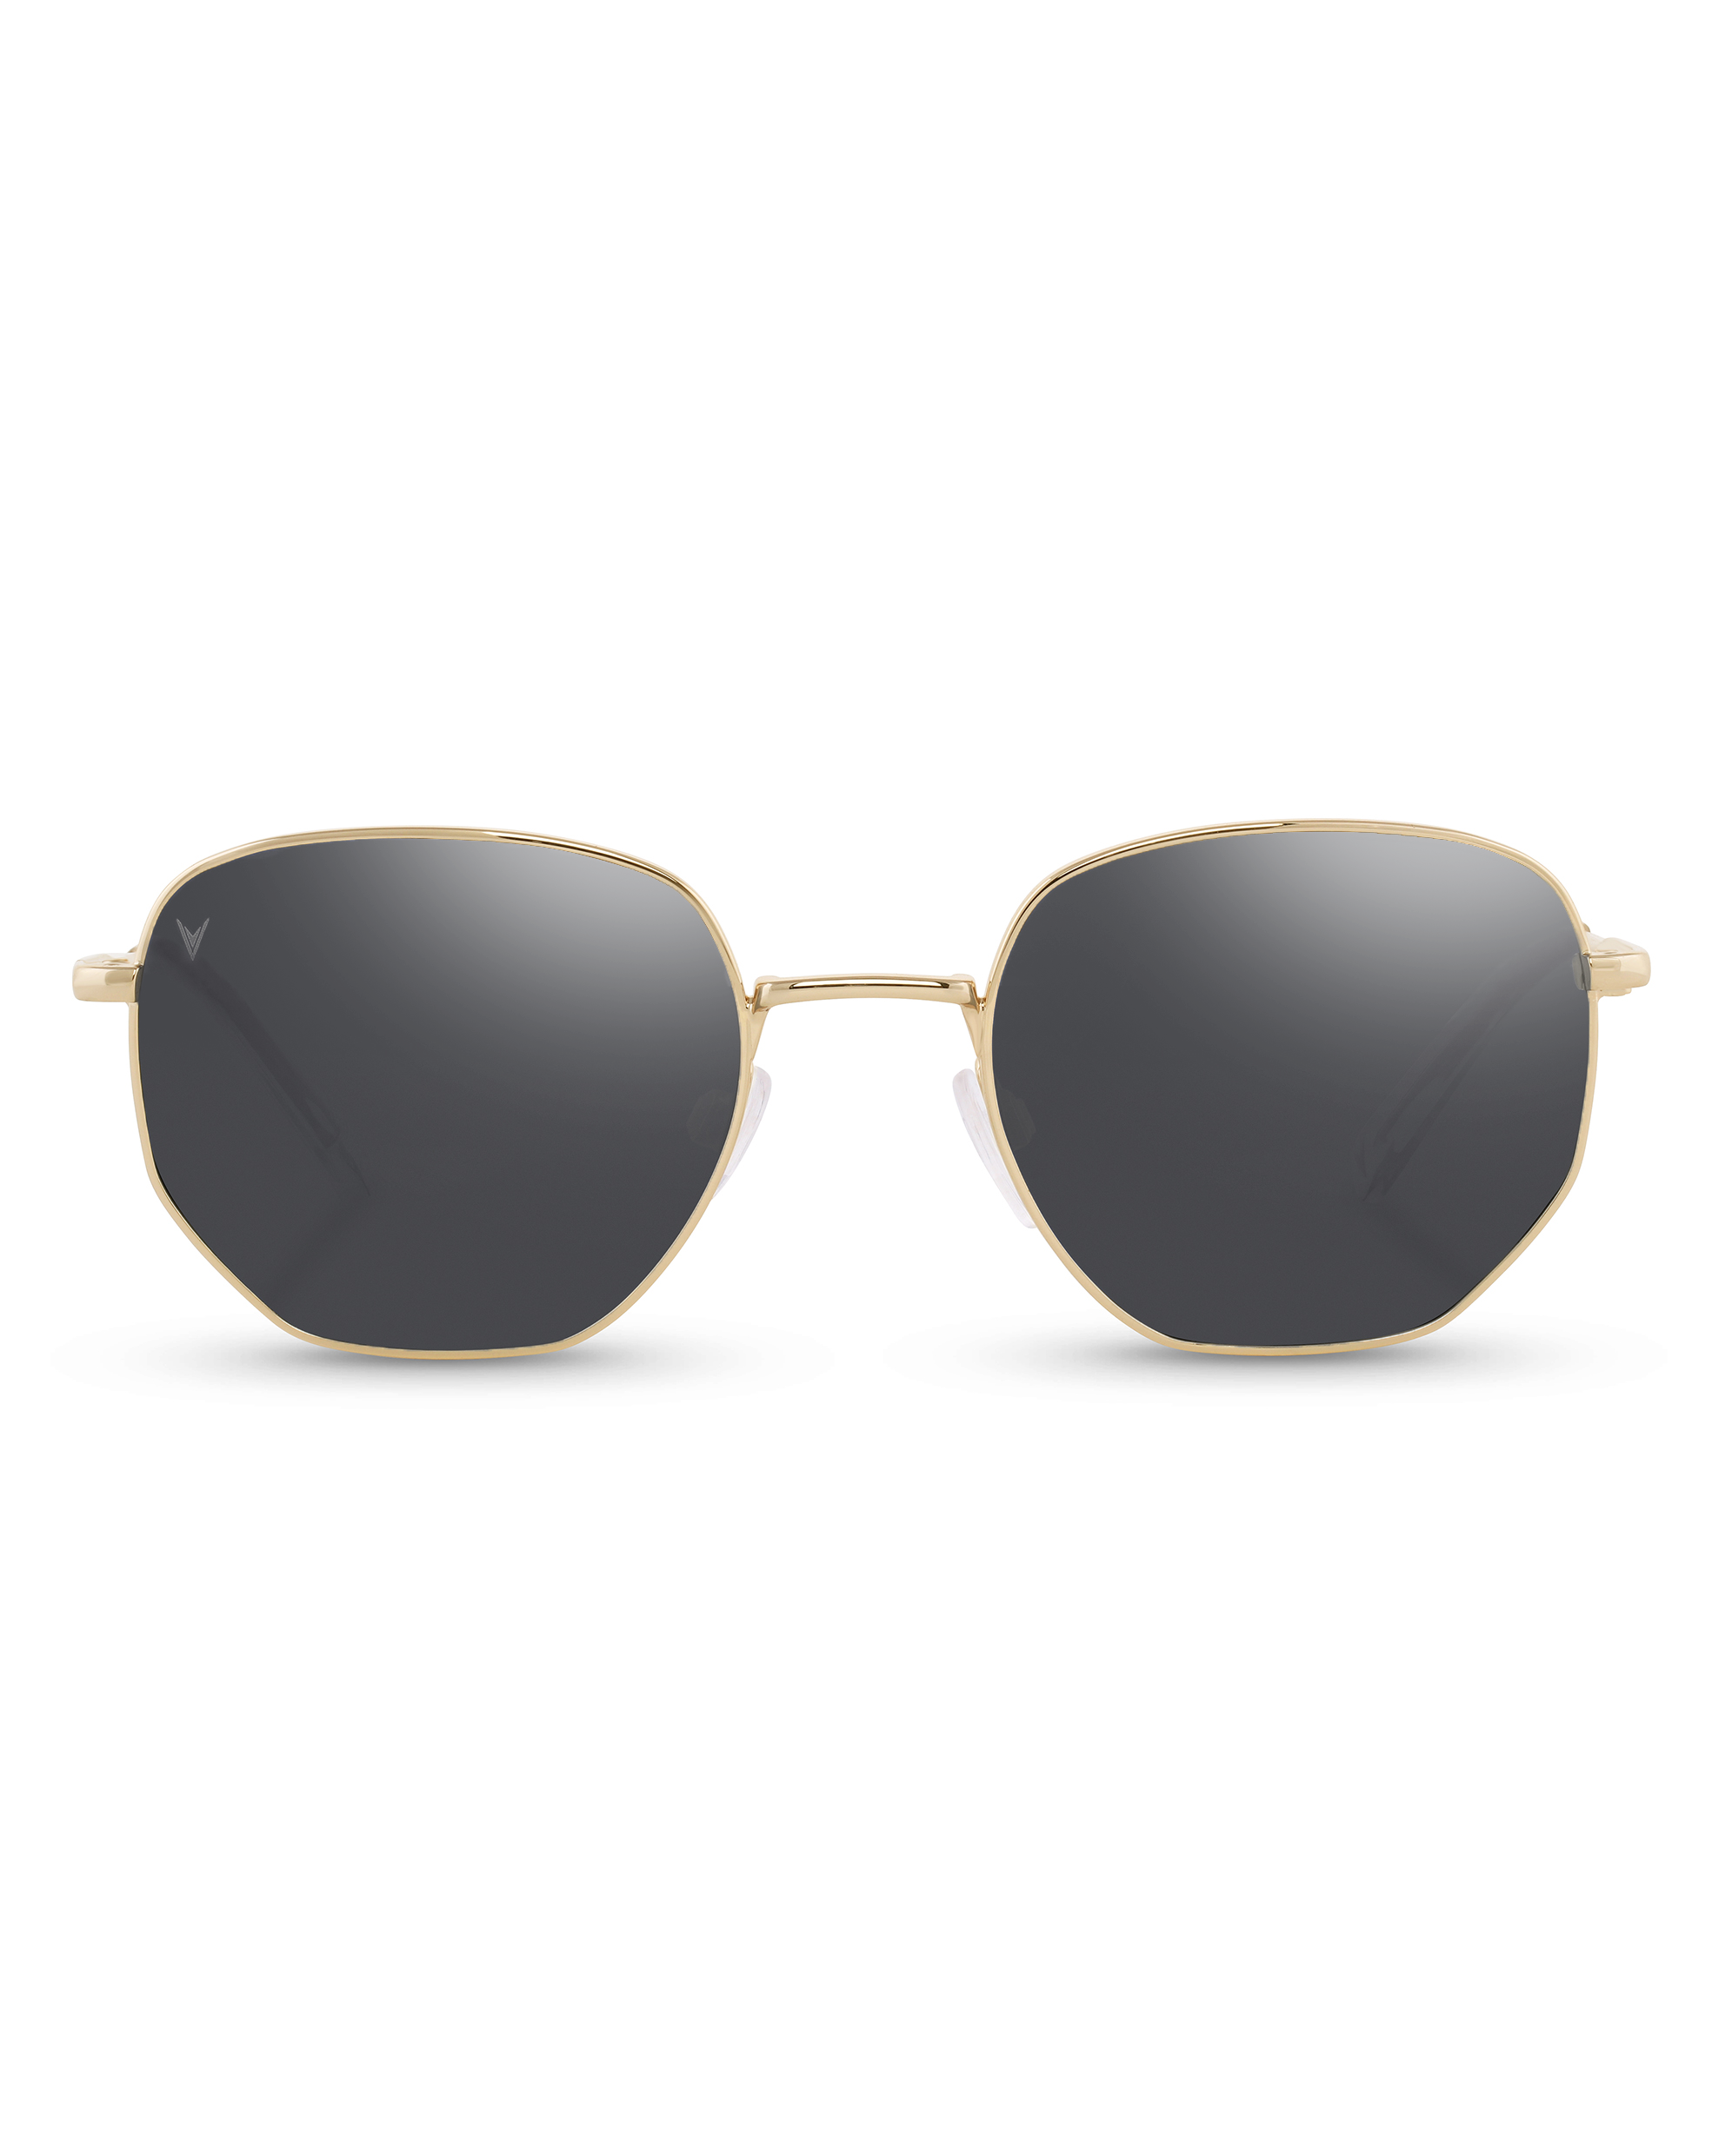 The Frankie - Gold Smoke - Men’s & Women's Sunglasses | Vincero Collective